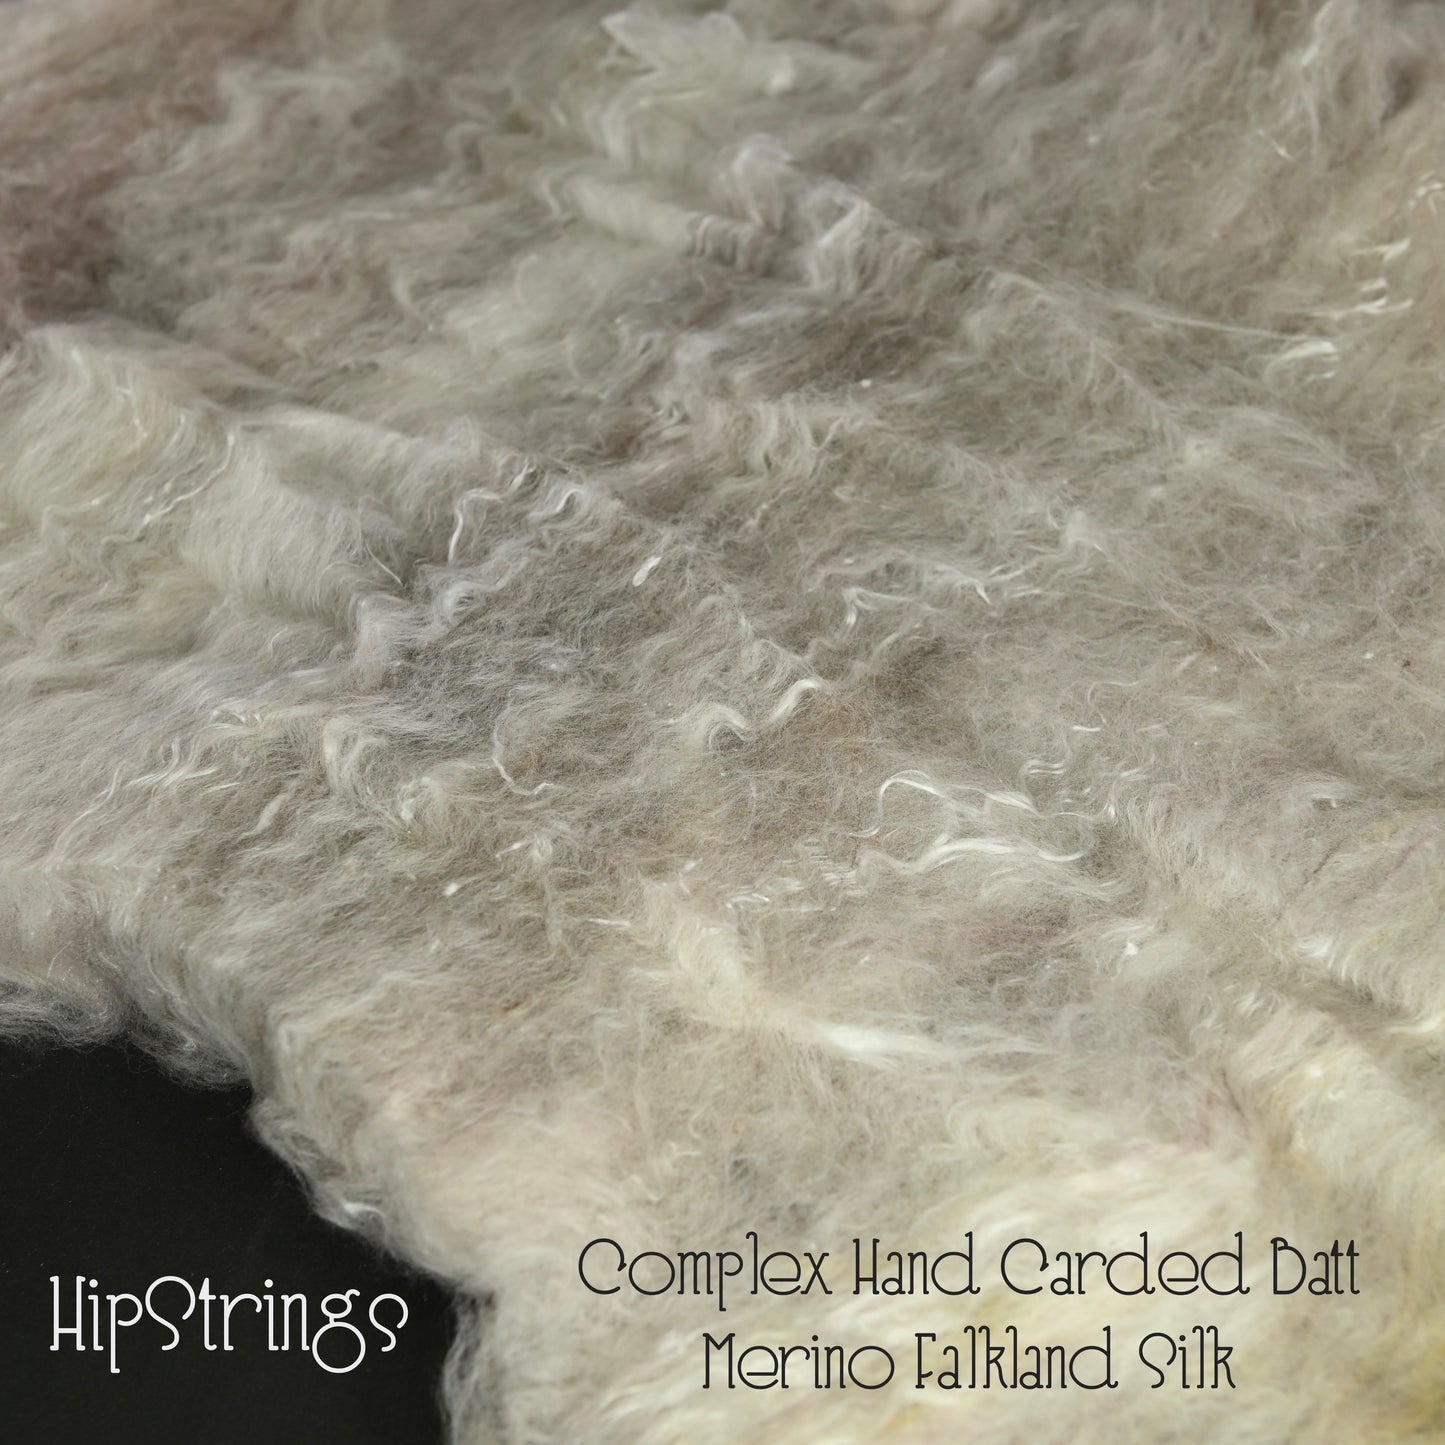 Complex Hand Carded Batt - Wool and Sari Silk - 4 oz